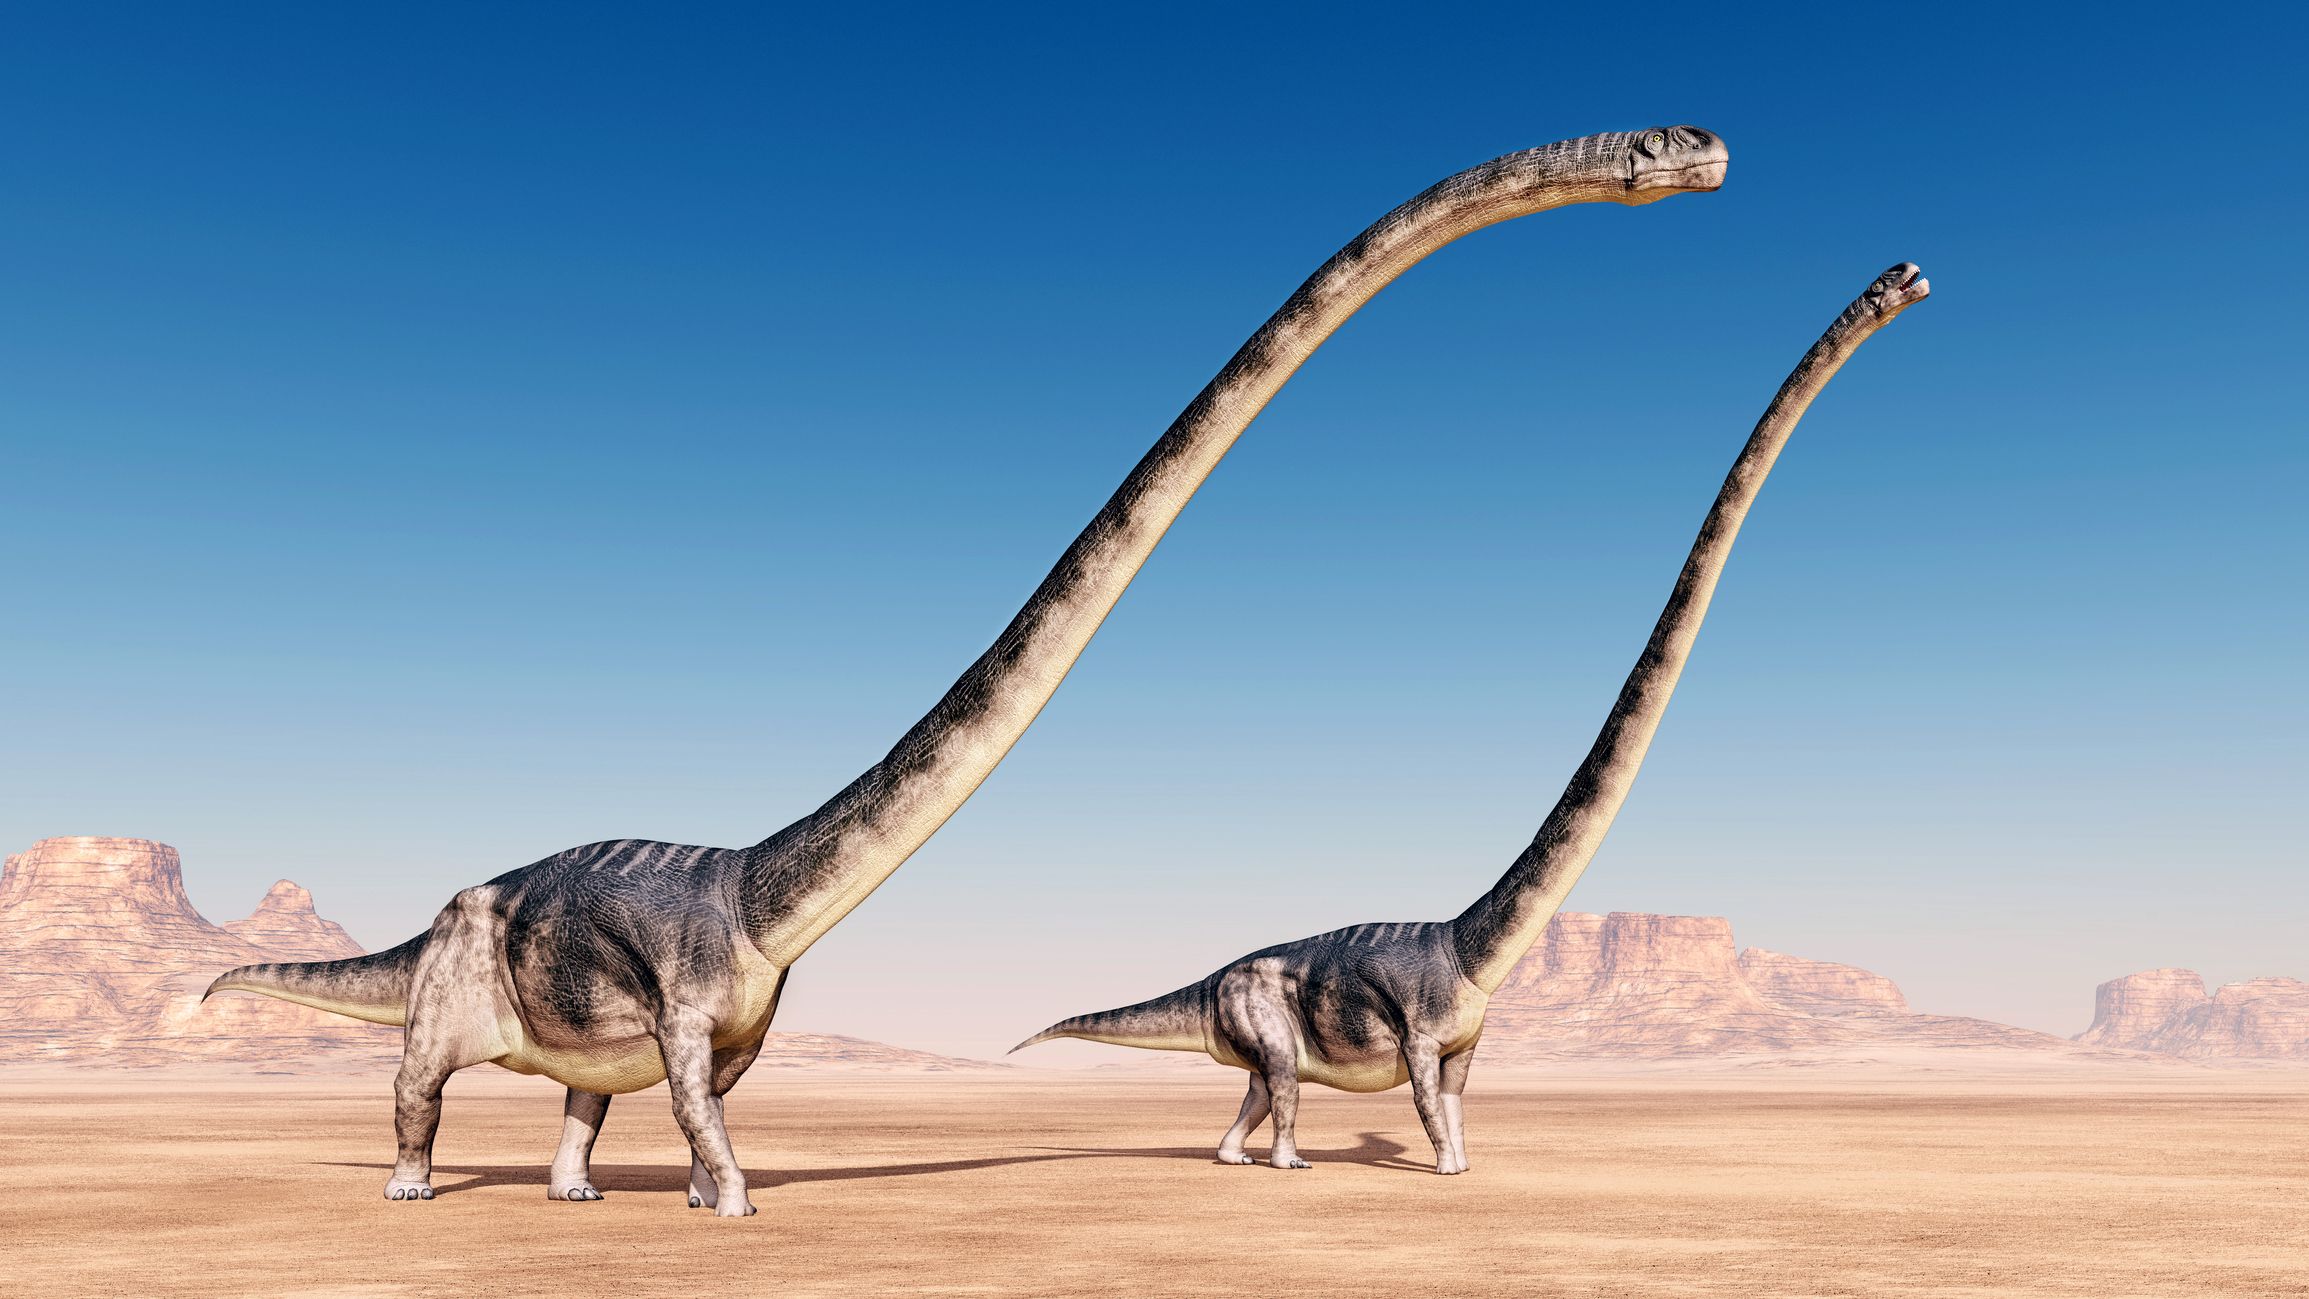 Lavocatisaurus Agrioensis New 40 Foot Long Dinosaur Species Discovered In Argentina 